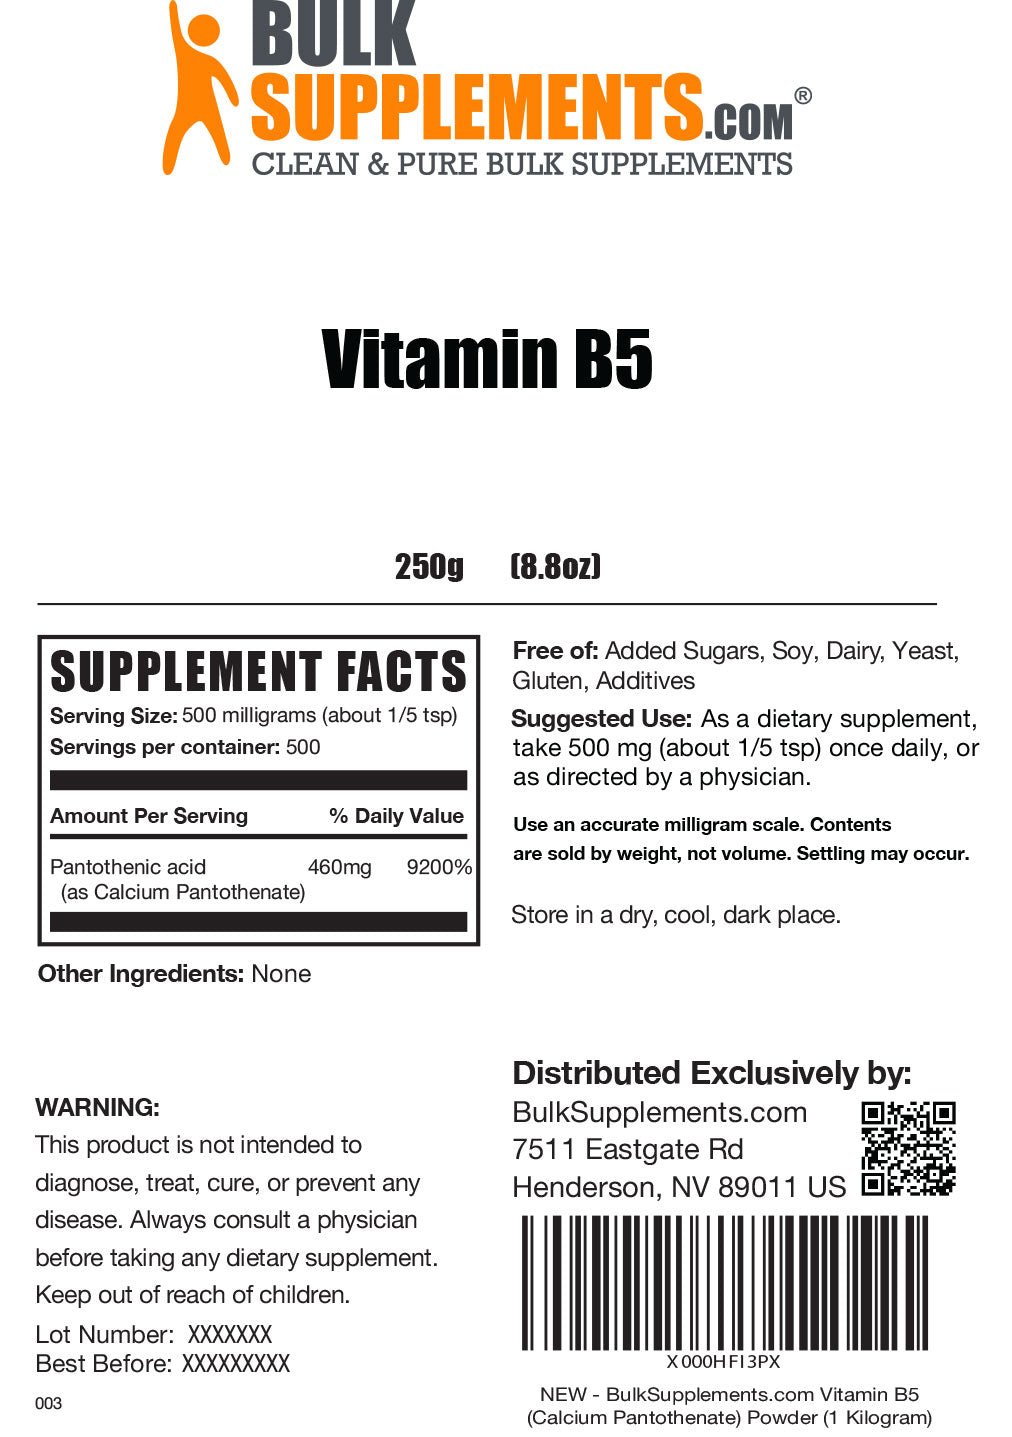 BulkSupplements.com Vitamin B5 Powder Label 250g